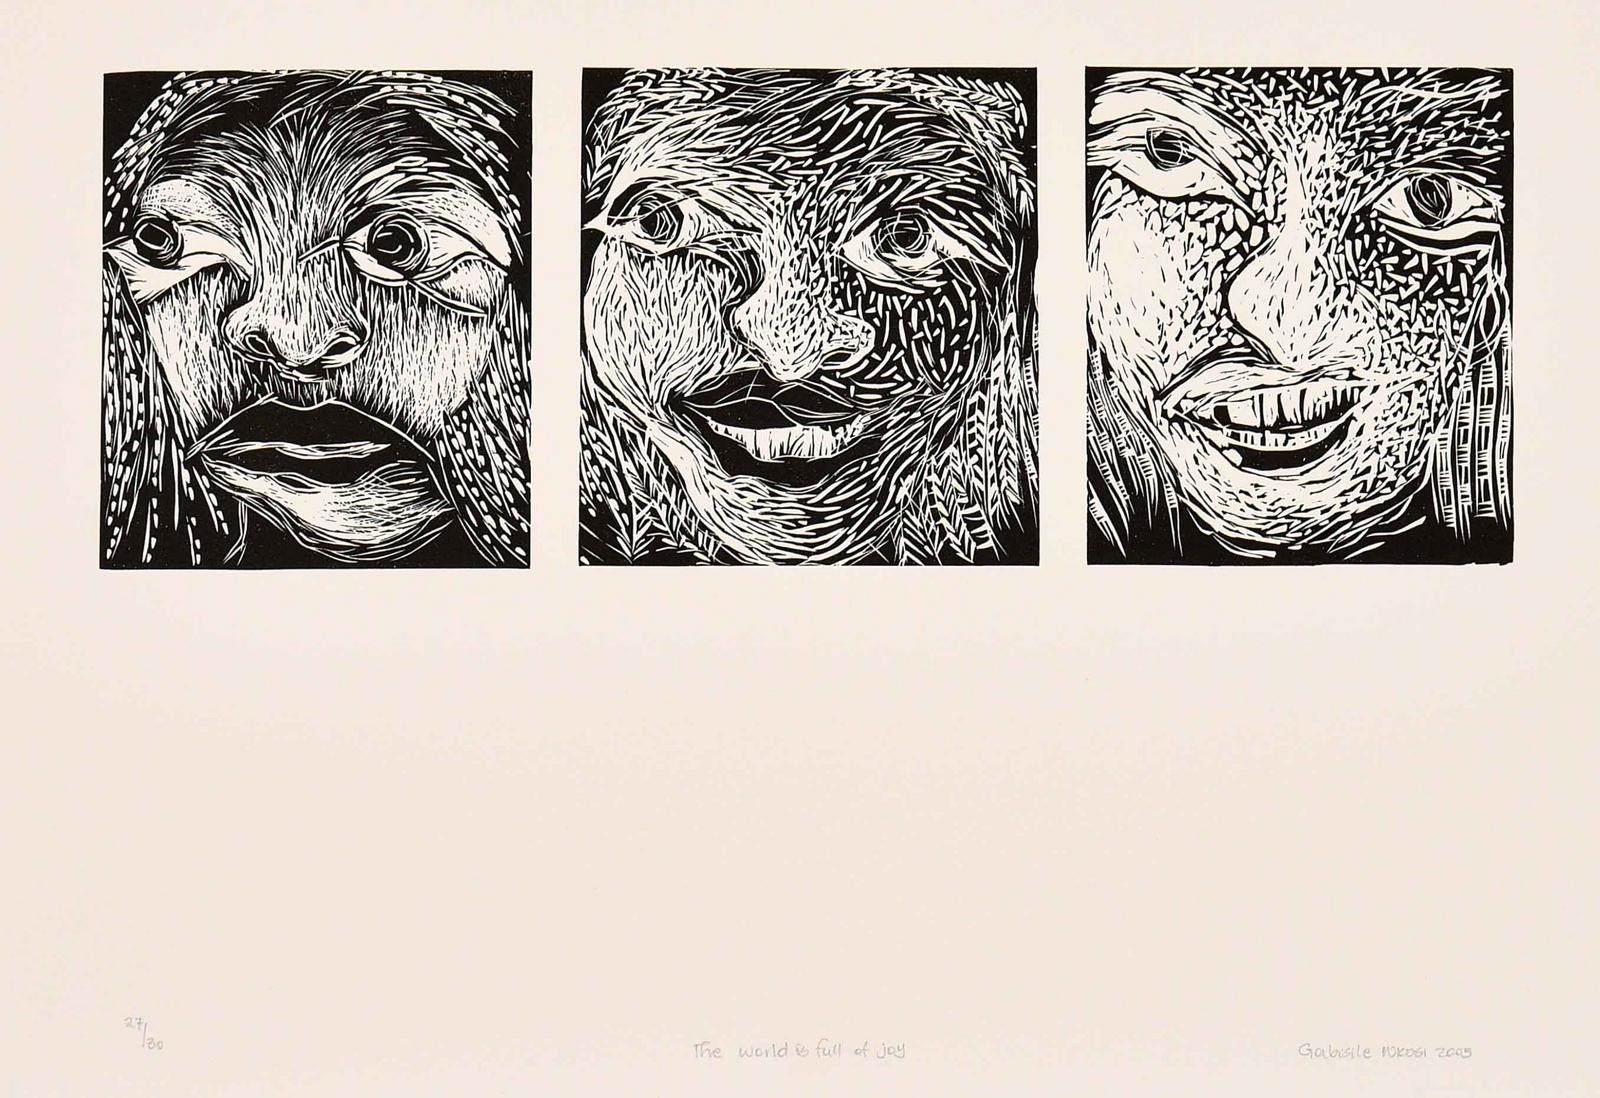 Gabisile Nkosi (South Africa, 1974 - 2008), The World Full of Joy by Gabisile Nkosi, dated 2003